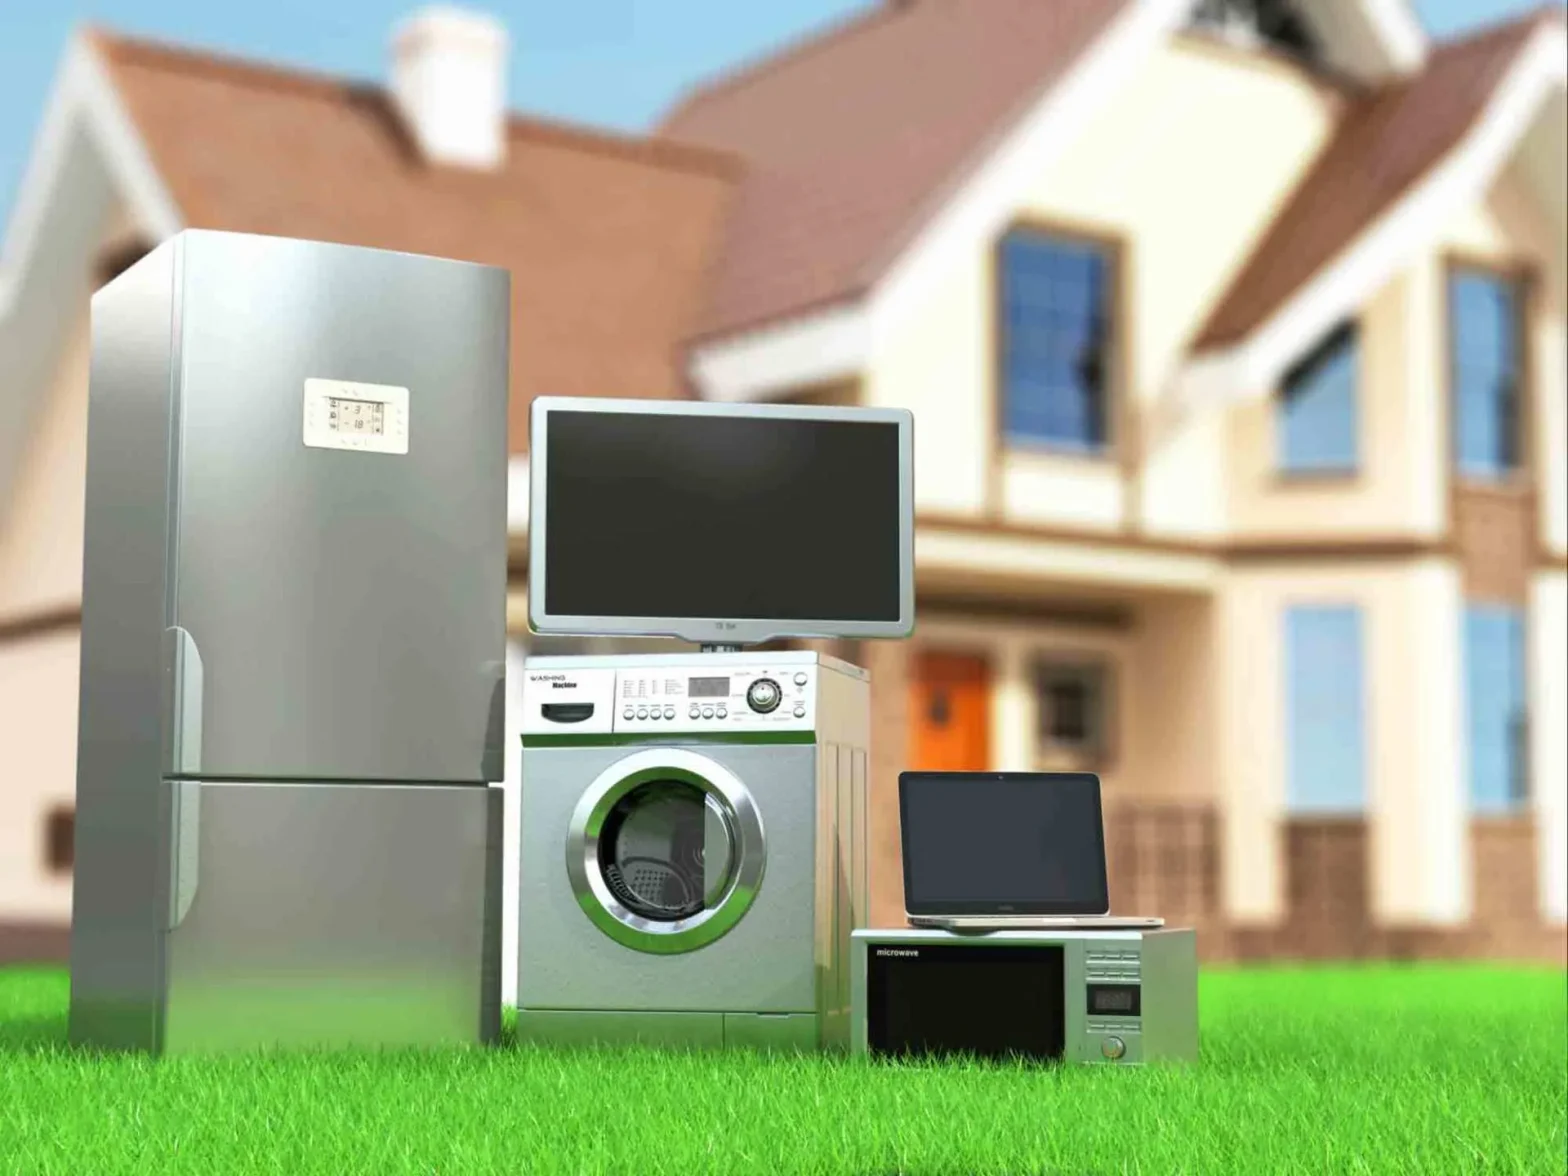 Connected Home Appliances Market